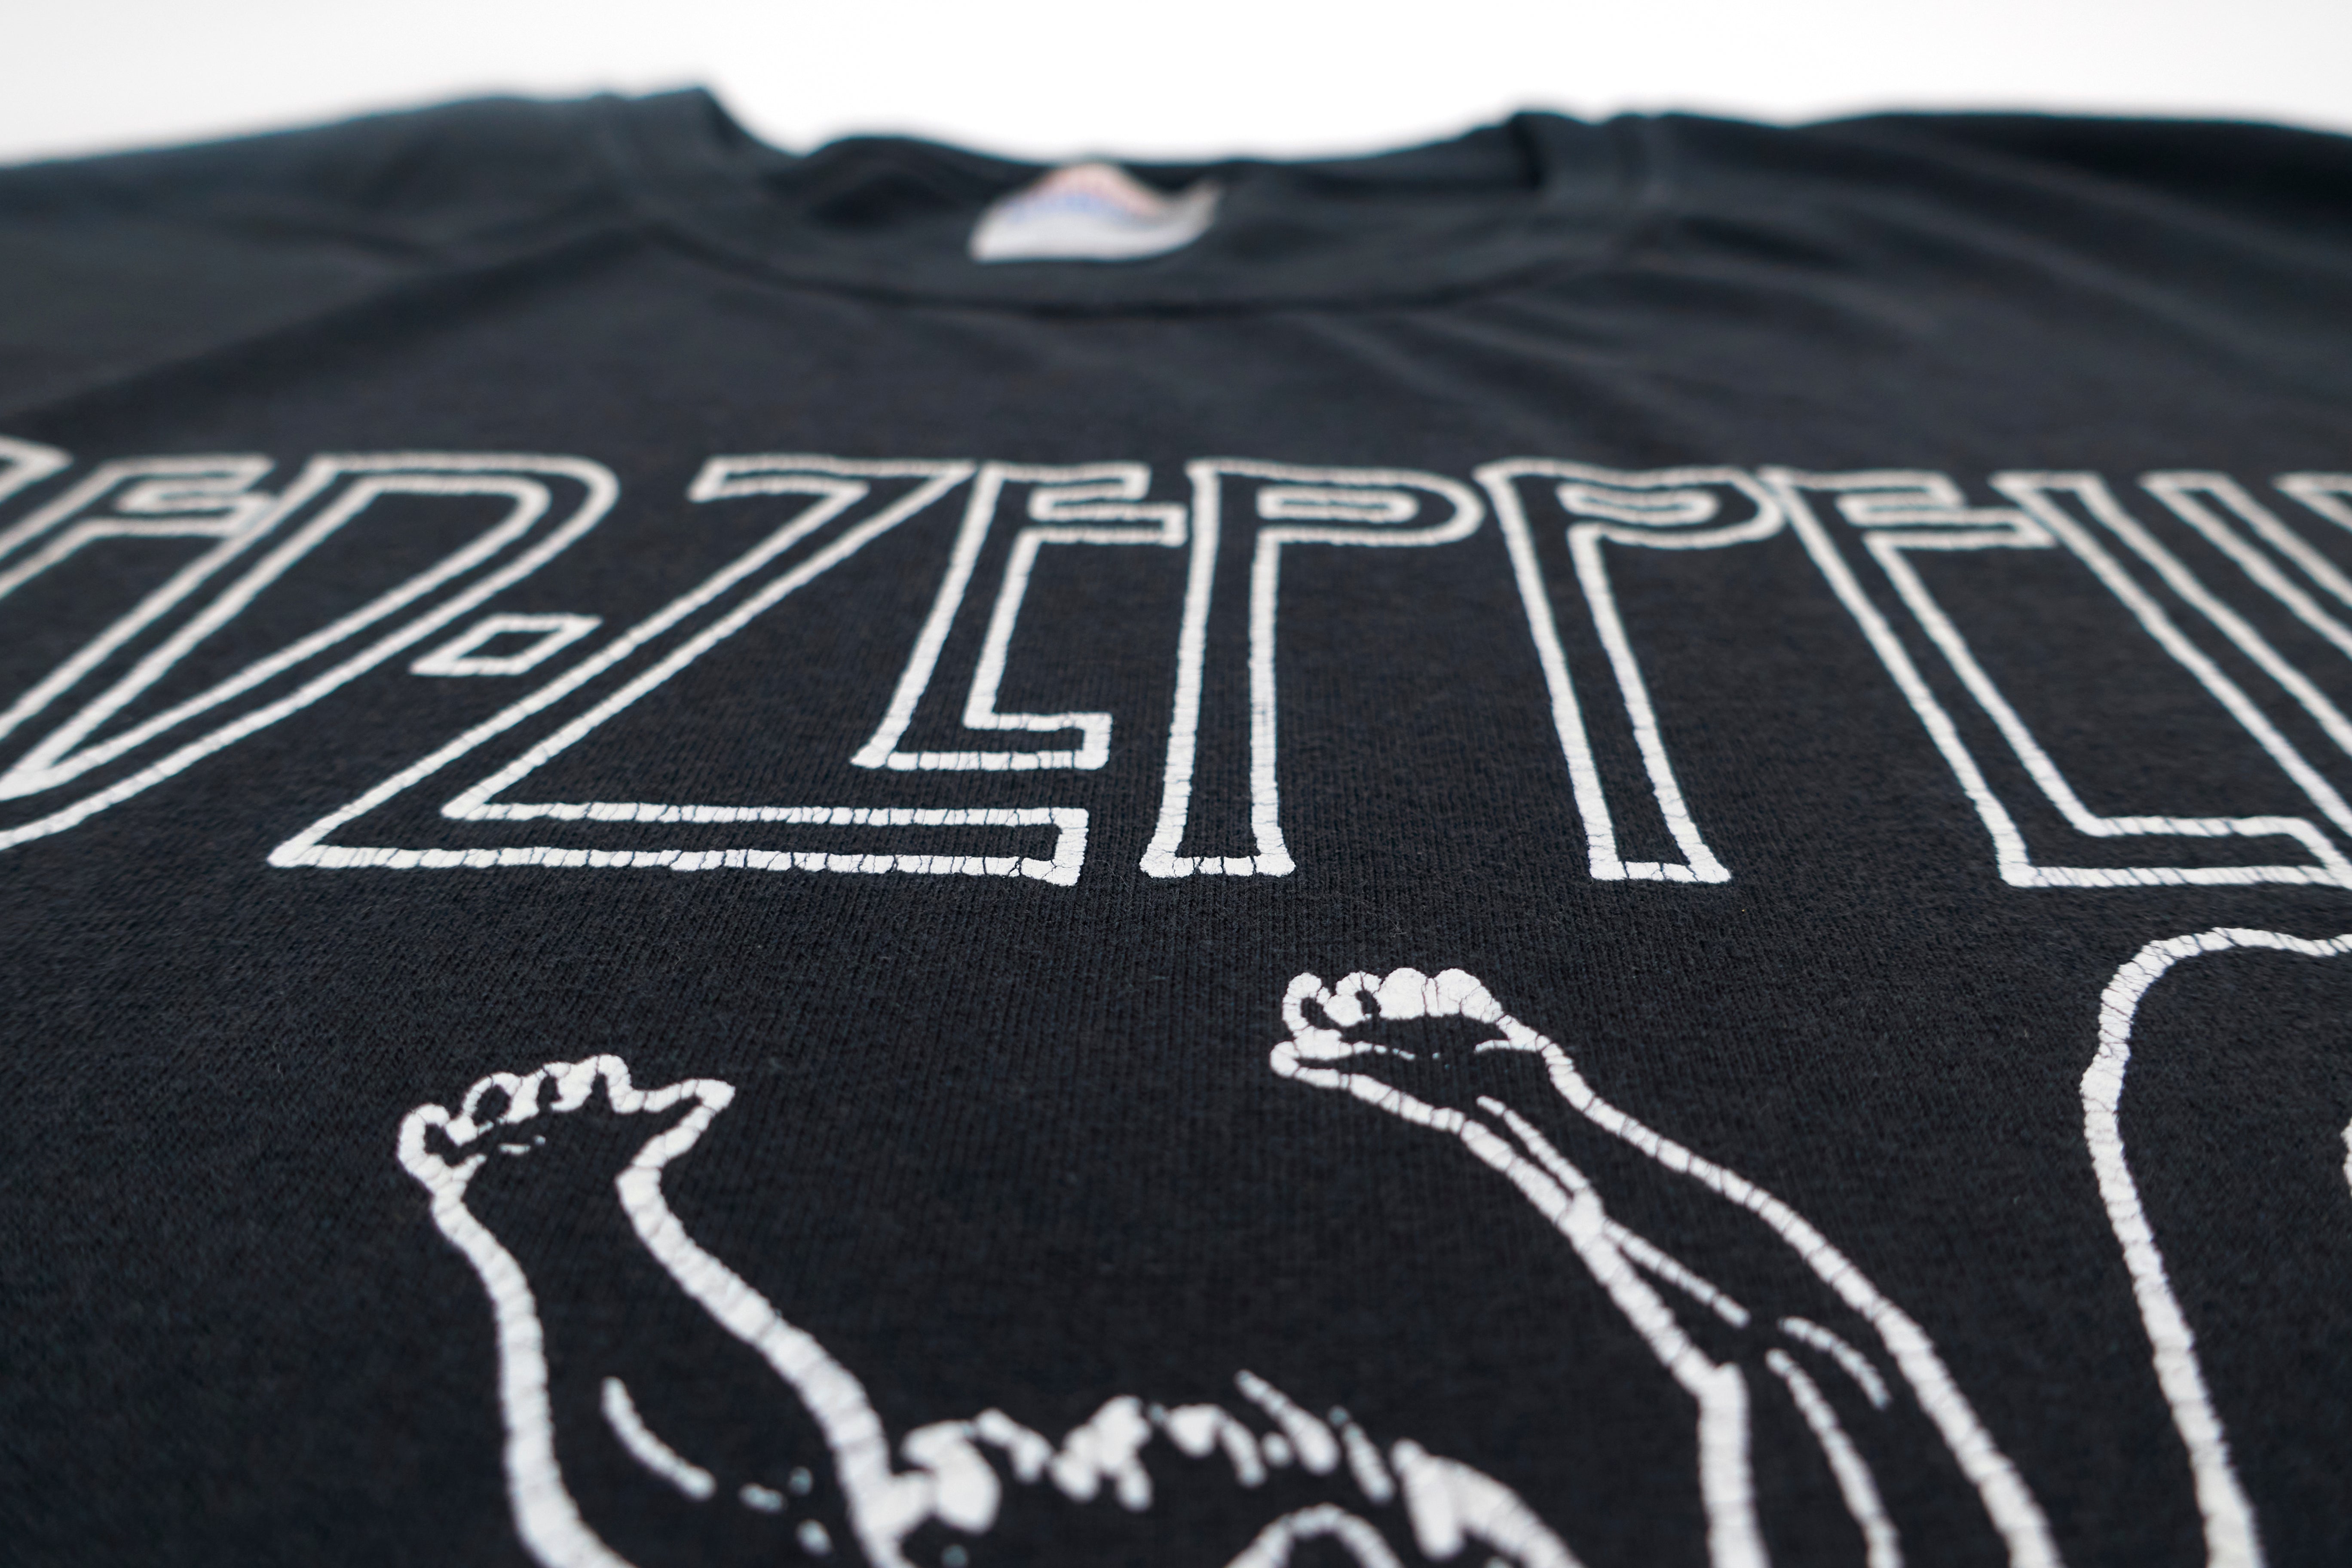 Led Zeppelin - Swan Song Outline ©2004 Shirt Size XL